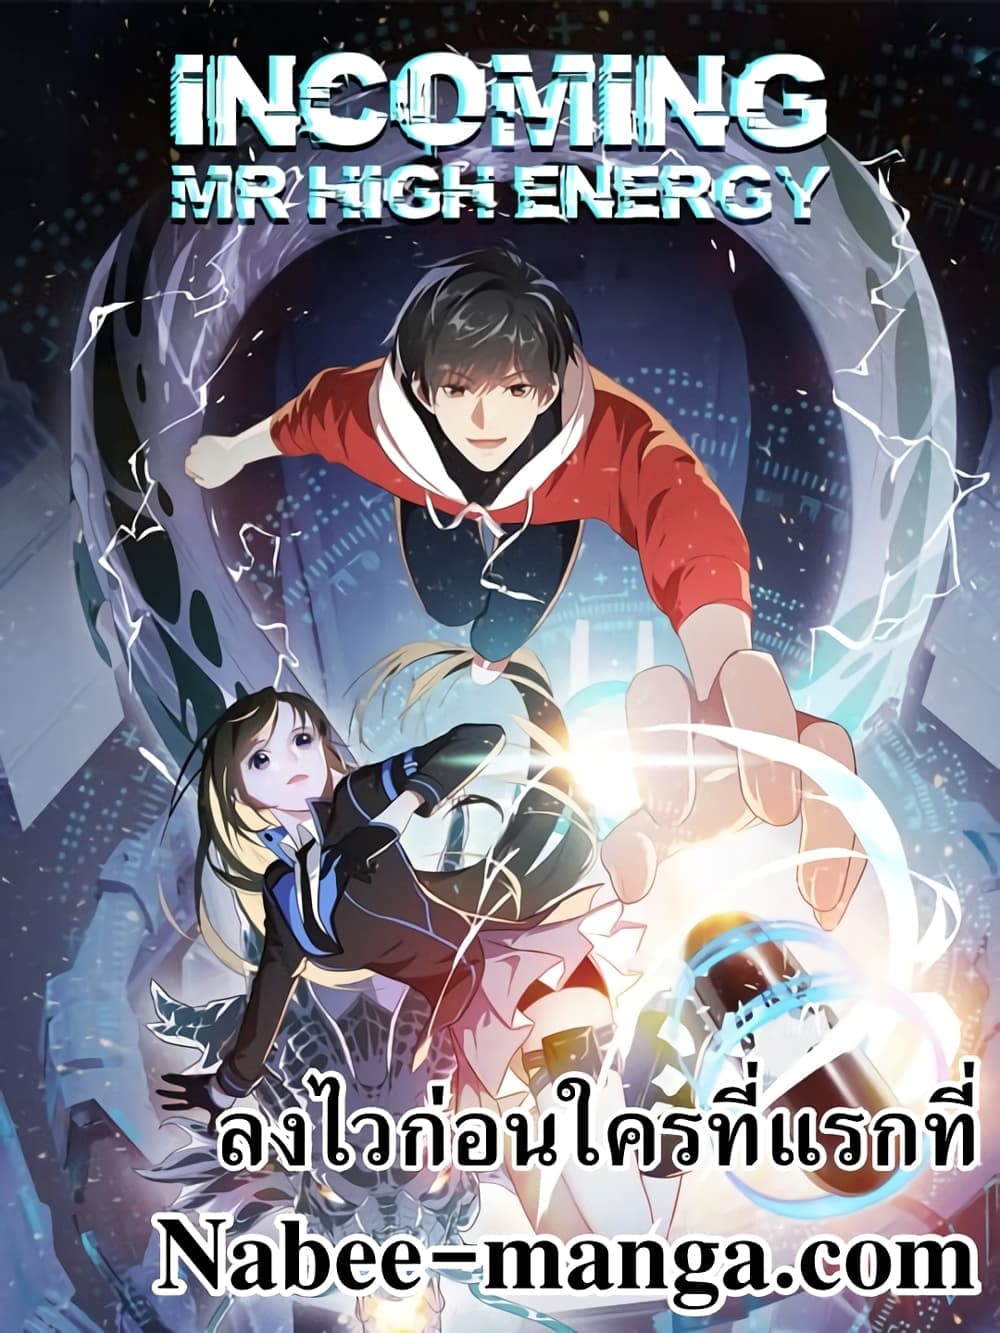 High Energy Strikes à¸à¸­à¸à¸à¸µà¹ 232 (1)